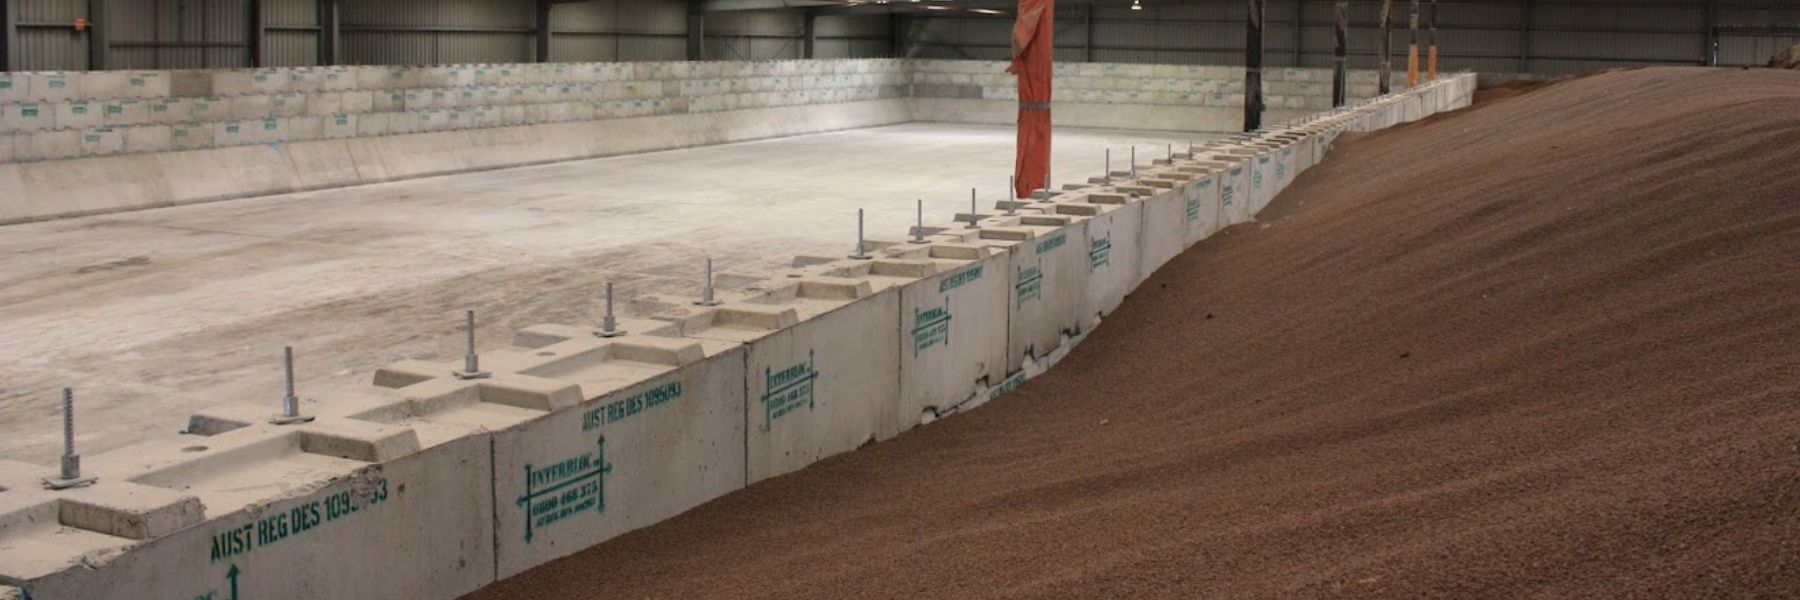 Interbloc concrete blocks forming a large fertiliser bin for Viterra